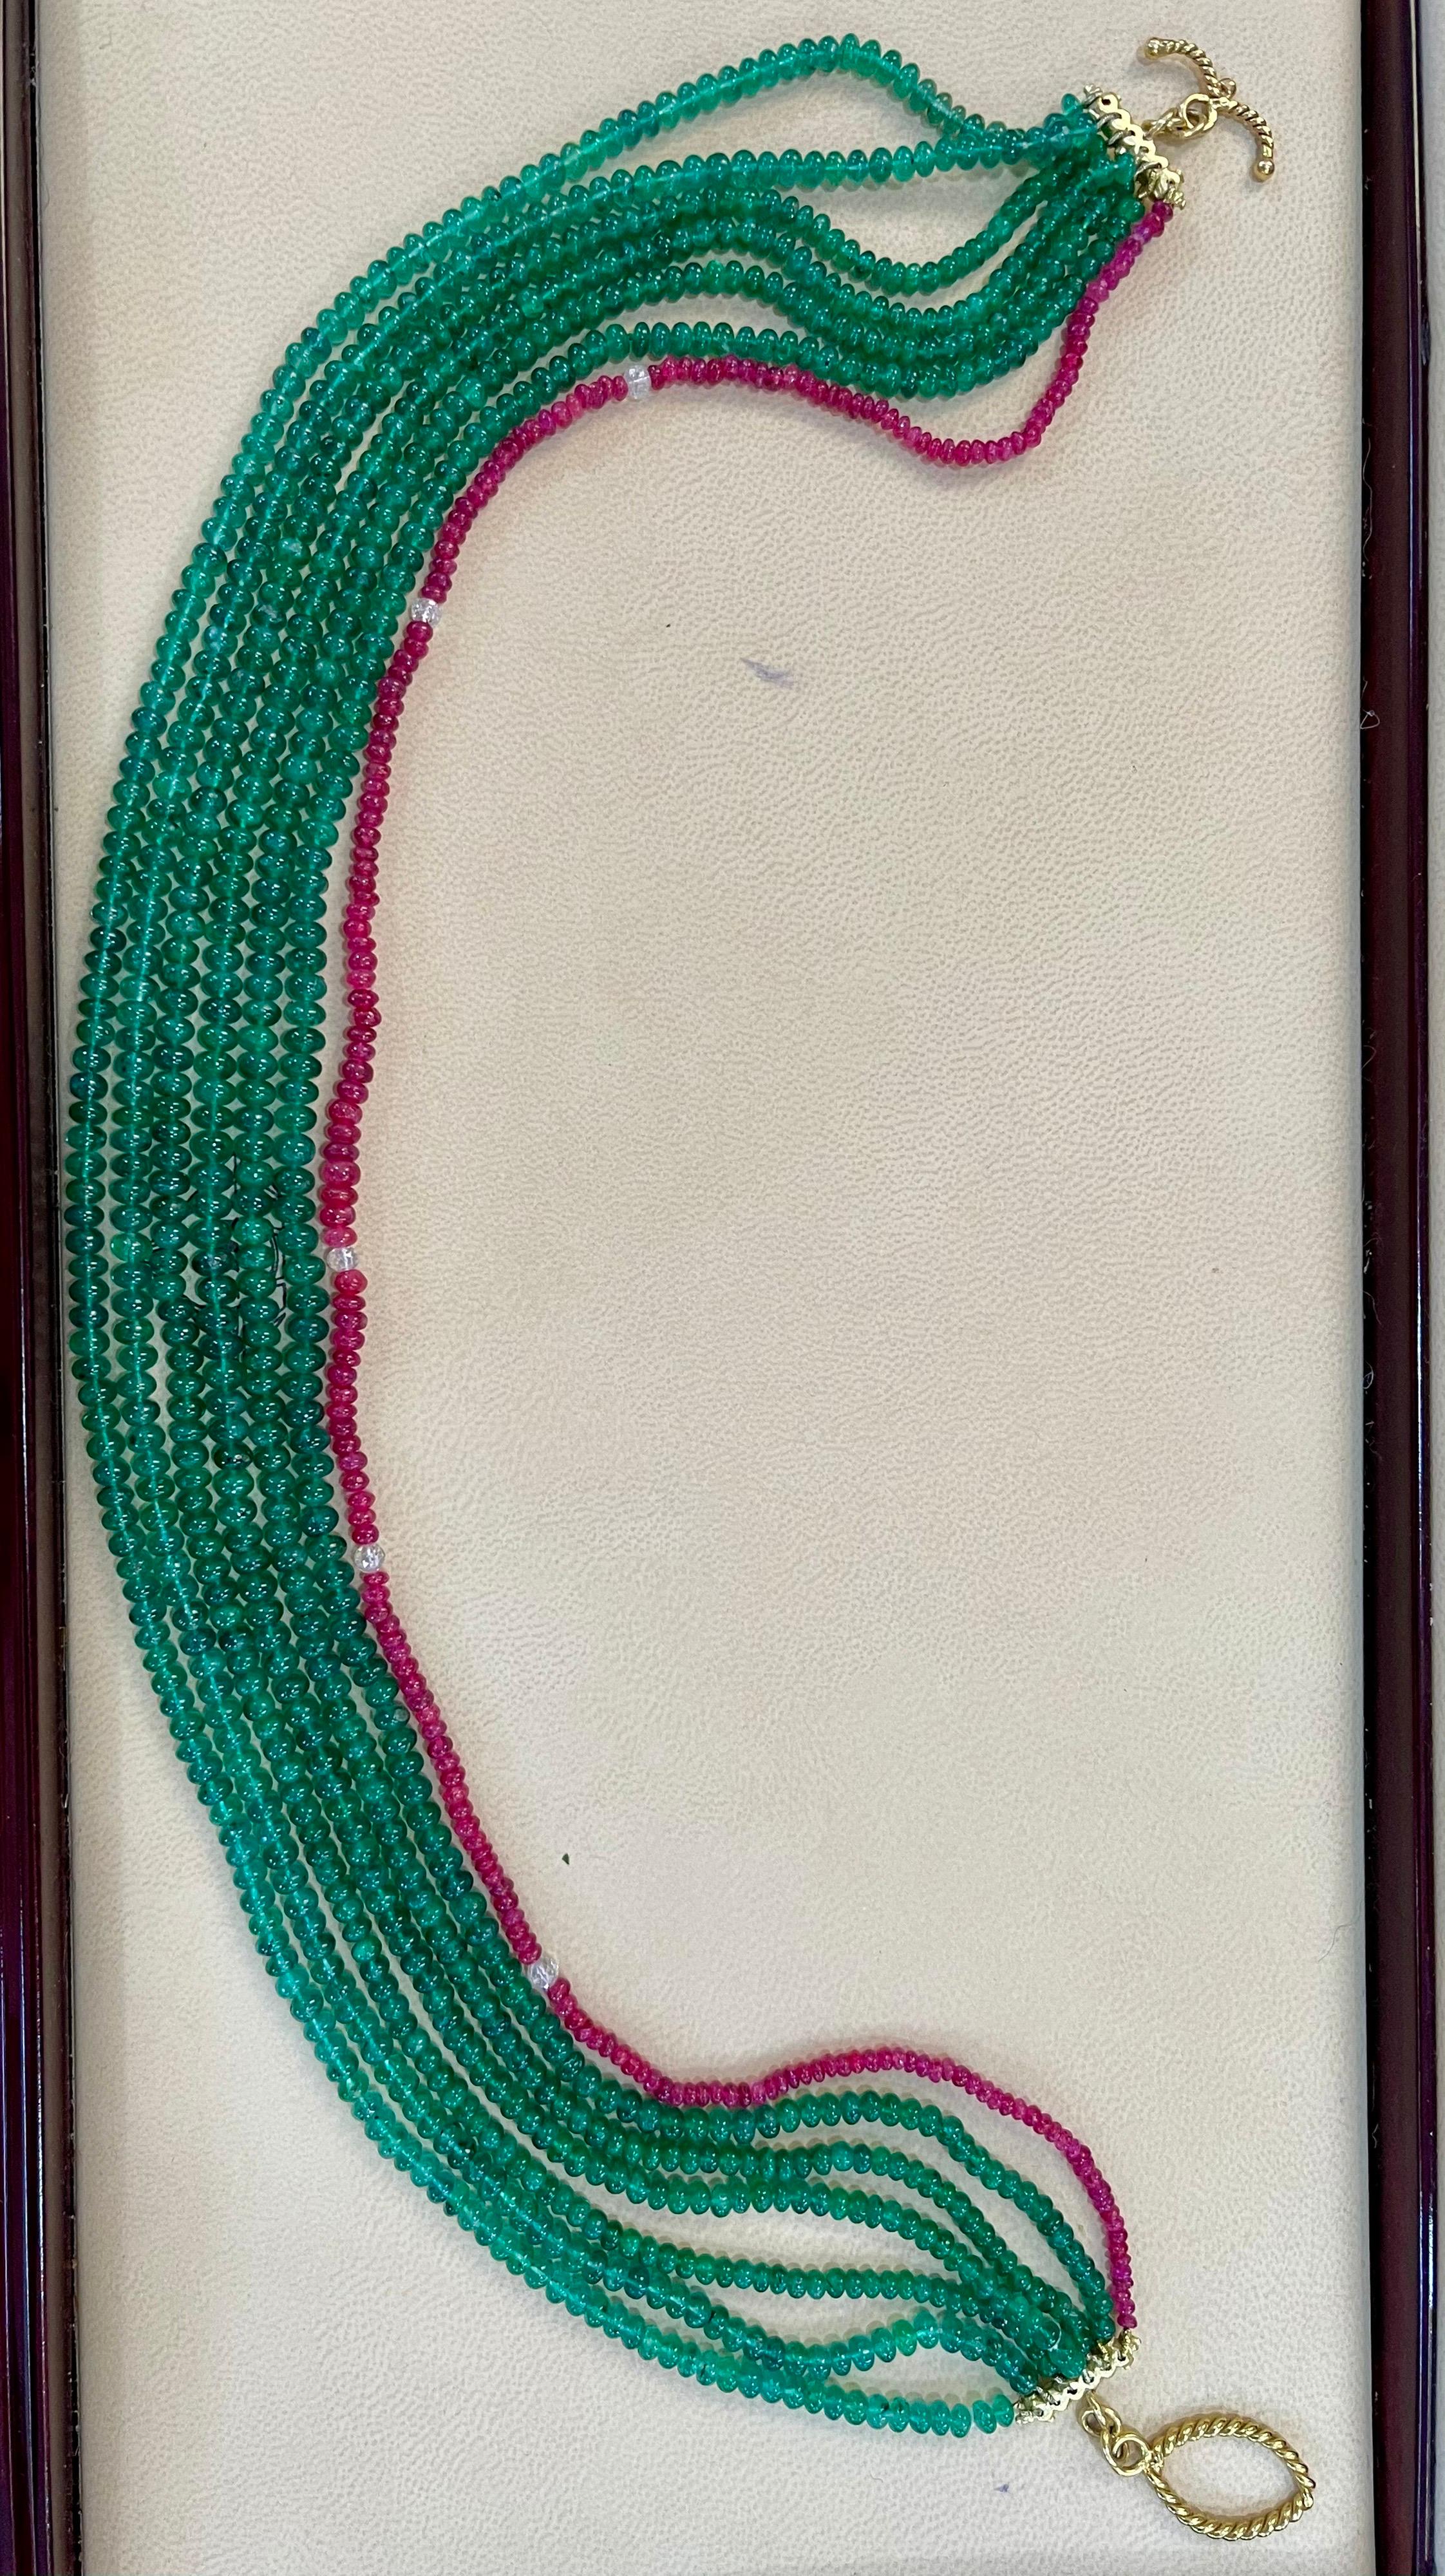 360 Carat Emerald, Burma Ruby and Diamond Beads Necklace 18 Karat Yellow Gold For Sale 12